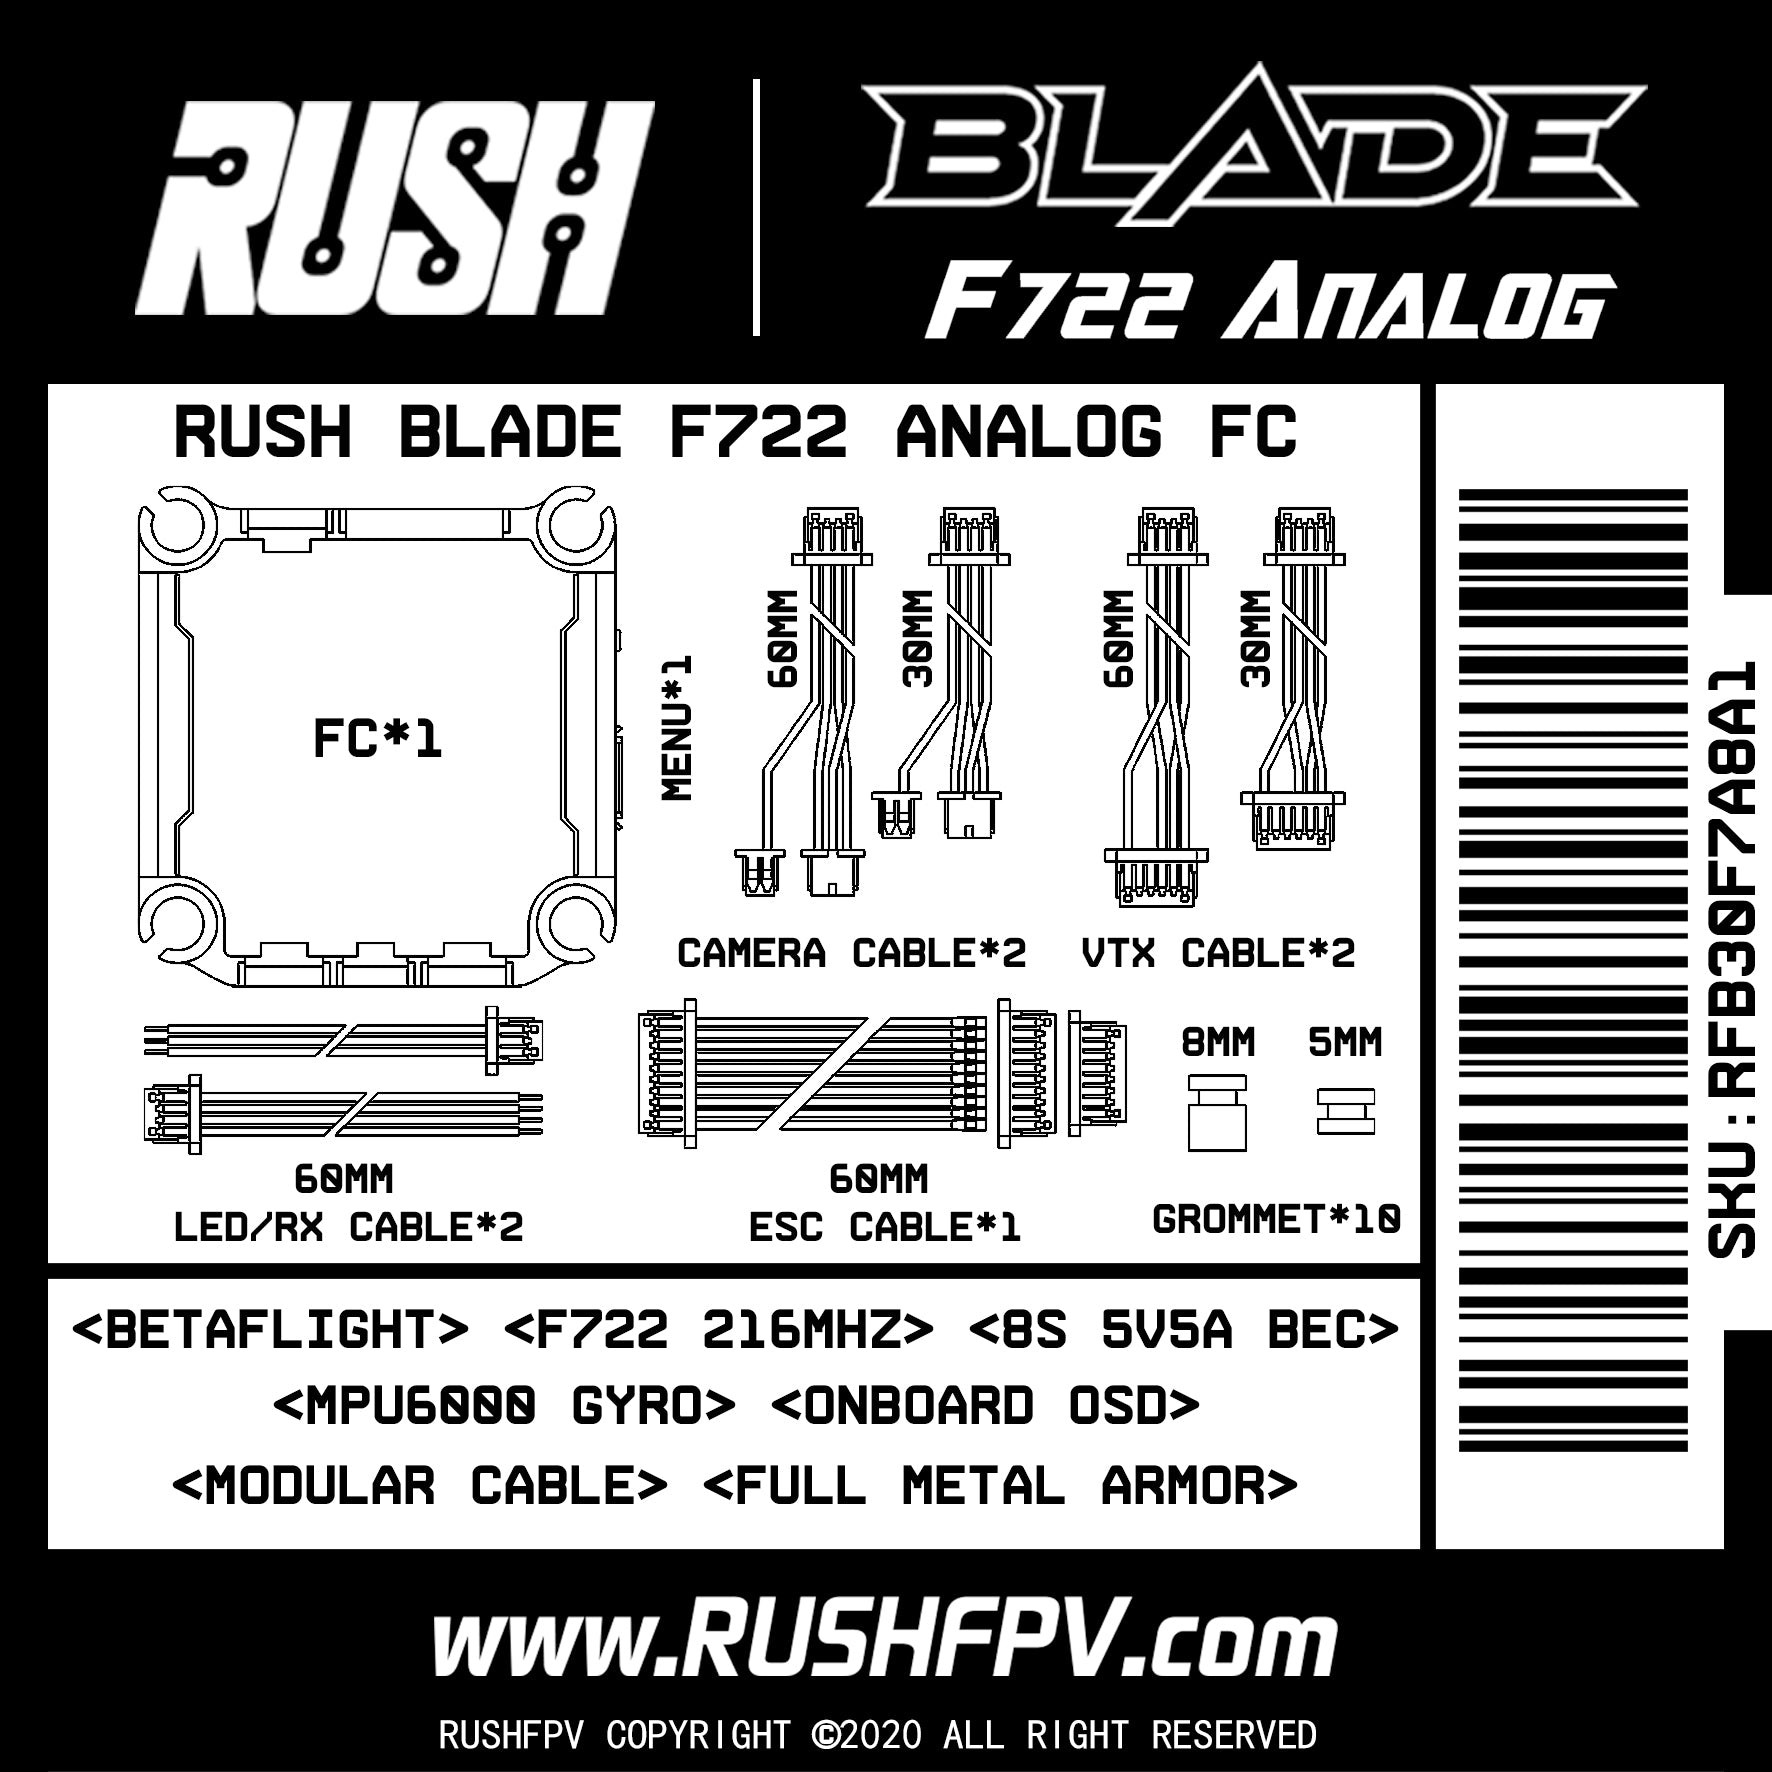 Rush Blade F722 30x30 FC for Analog